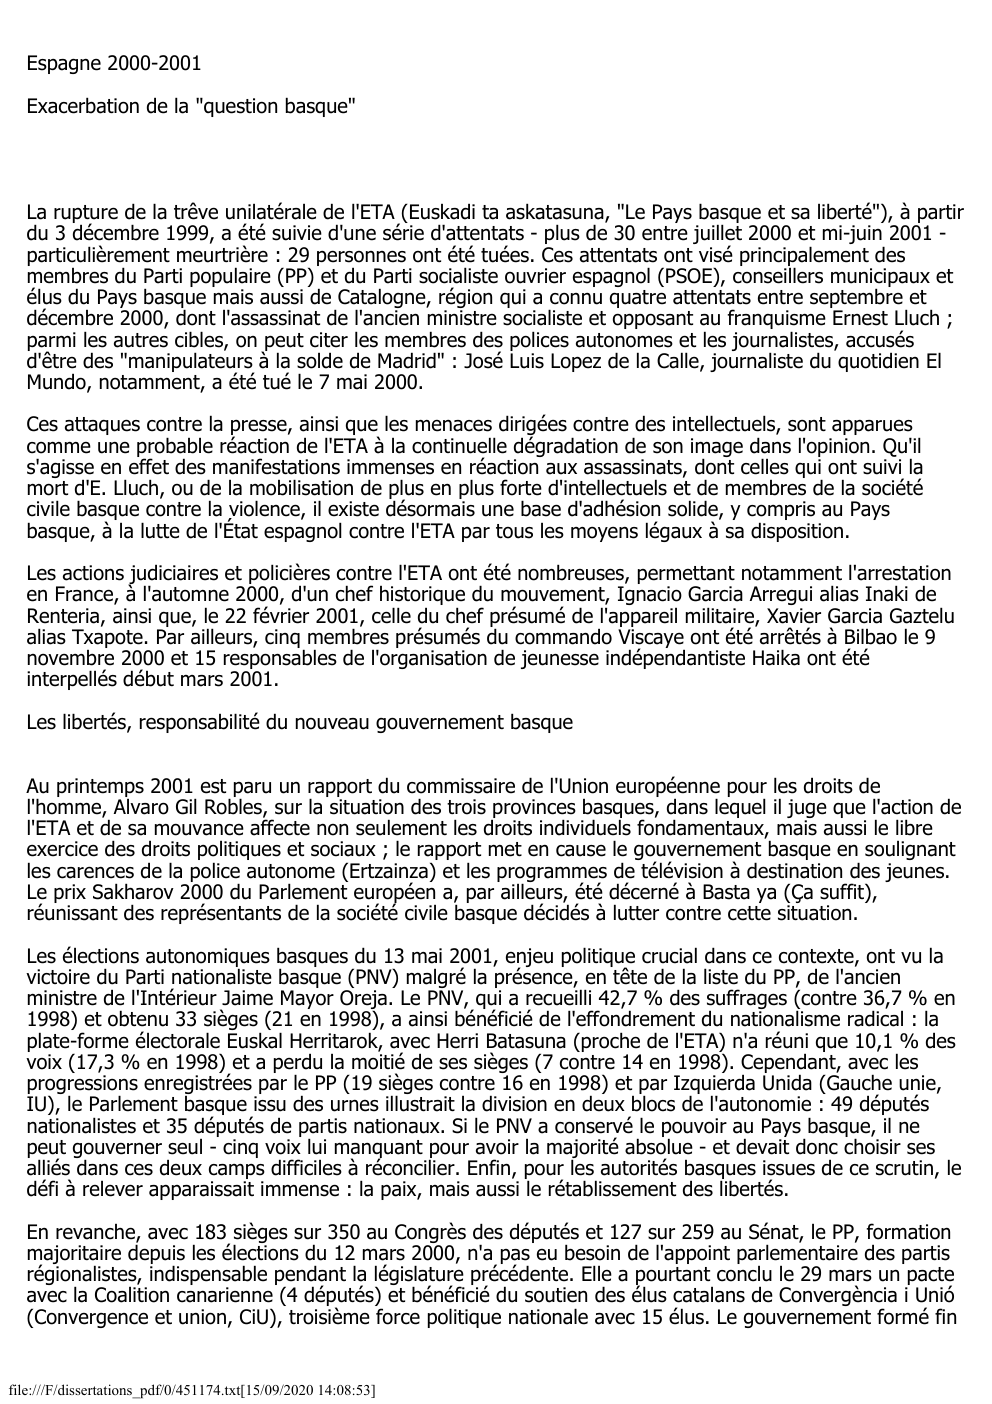 Prévisualisation du document Espagne 2000-2001
Exacerbation de la "question basque"

La rupture de la trêve unilatérale de l'ETA (Euskadi ta askatasuna, "Le Pays...